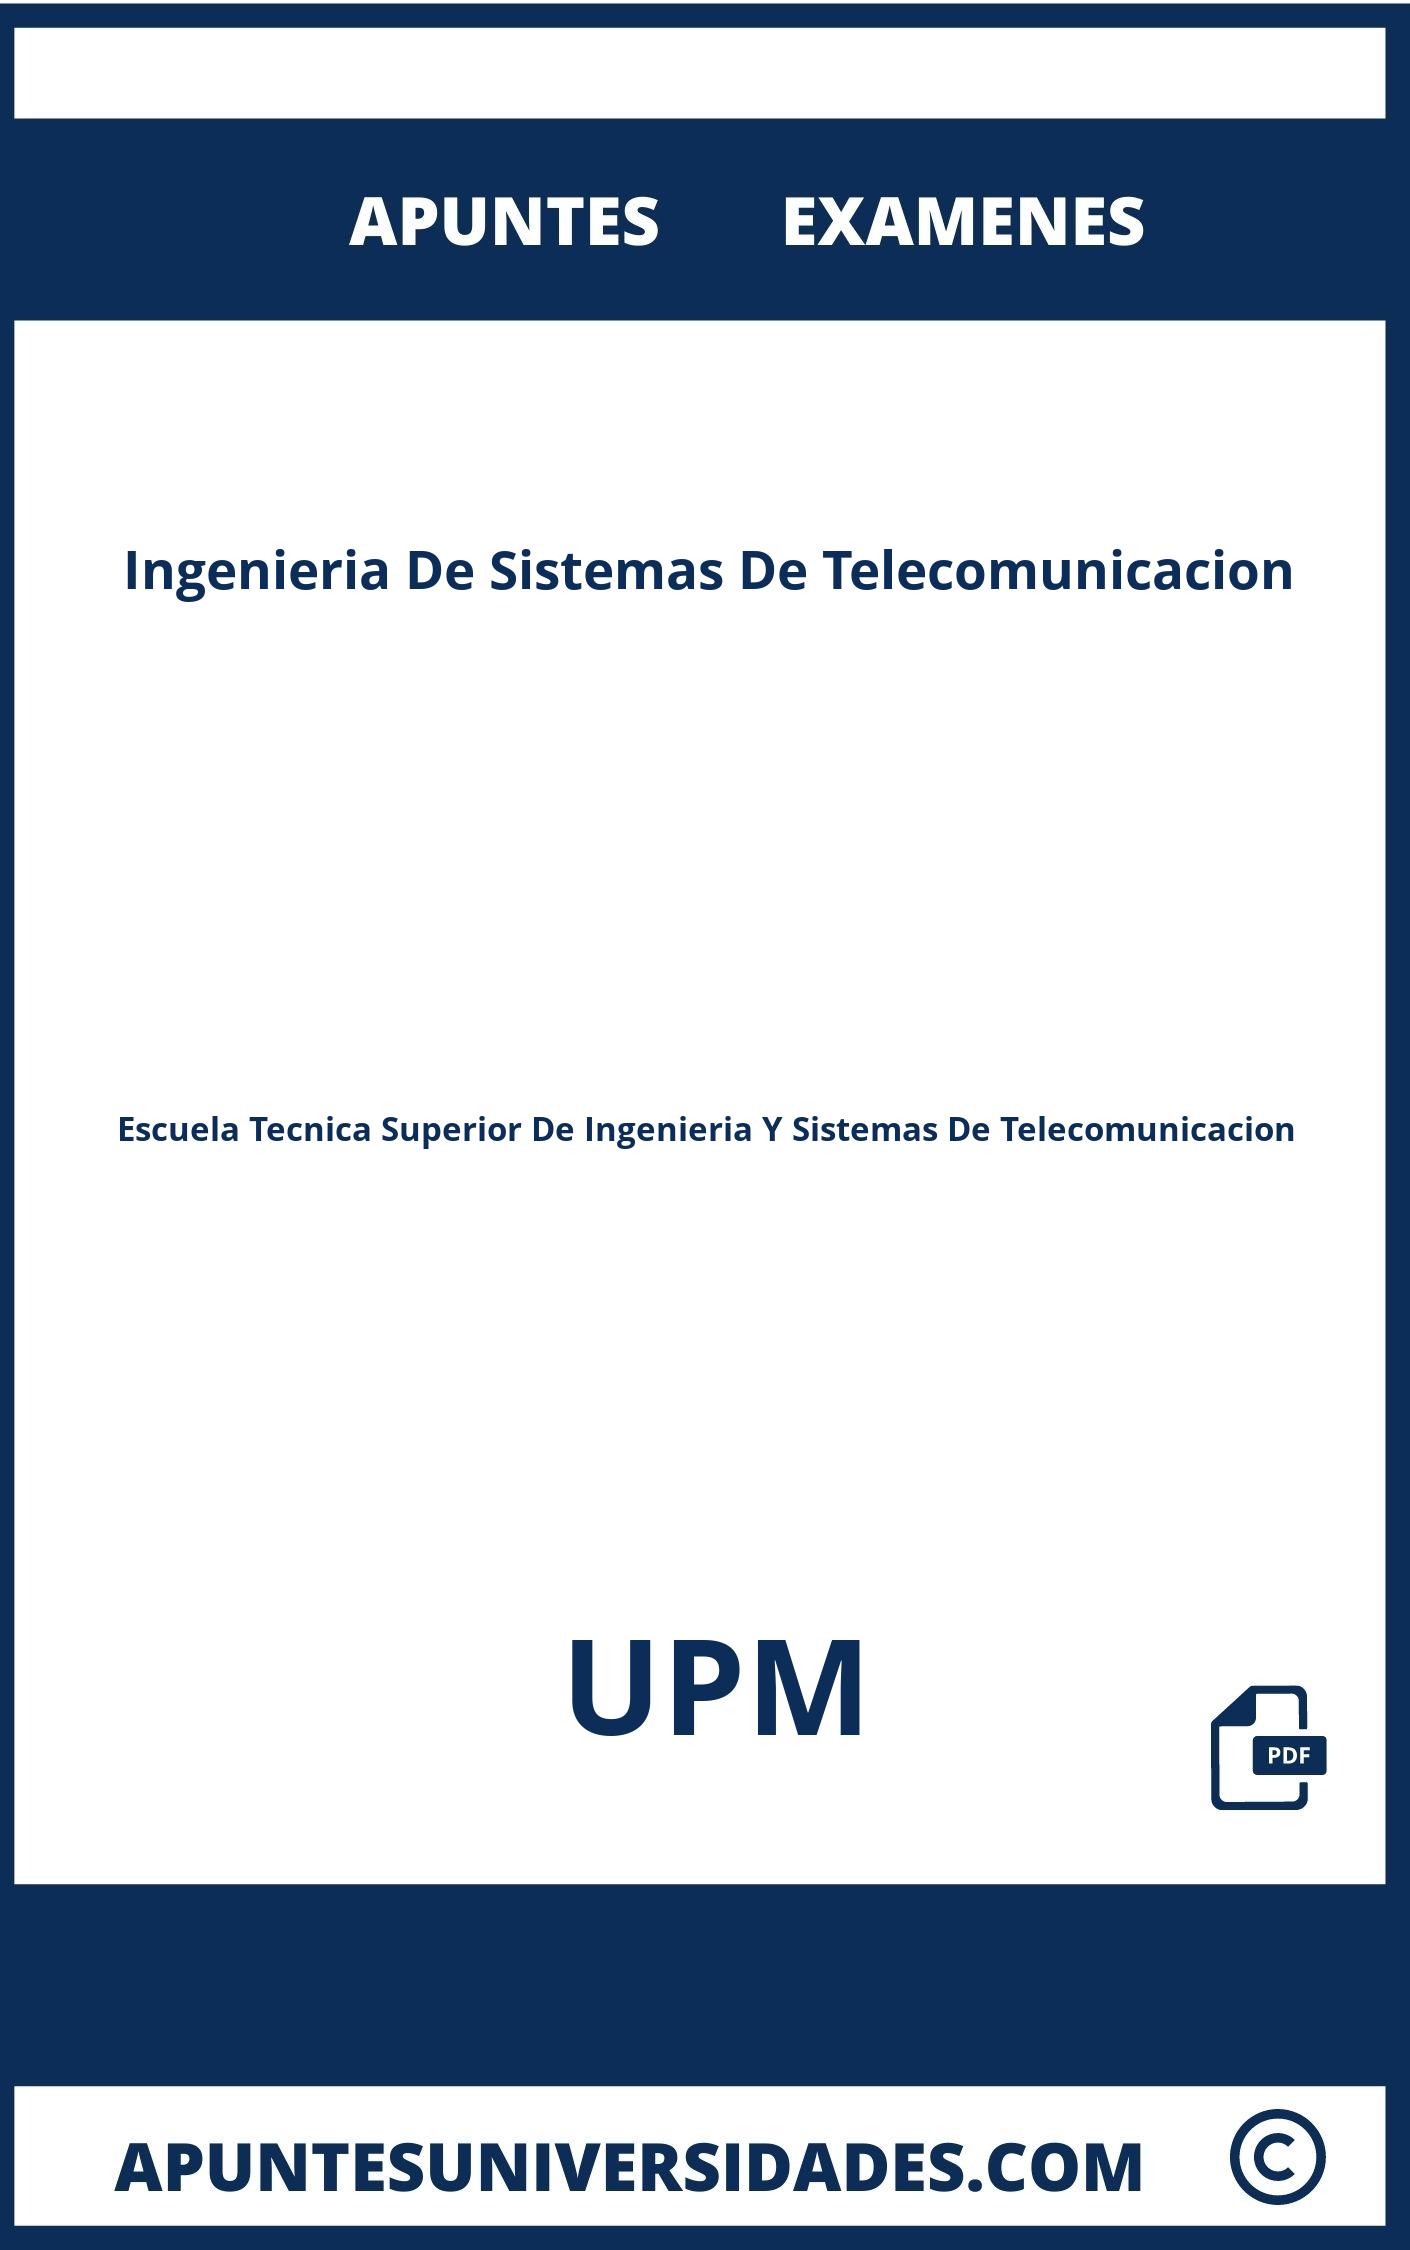 Apuntes Examenes Ingenieria De Sistemas De Telecomunicacion UPM